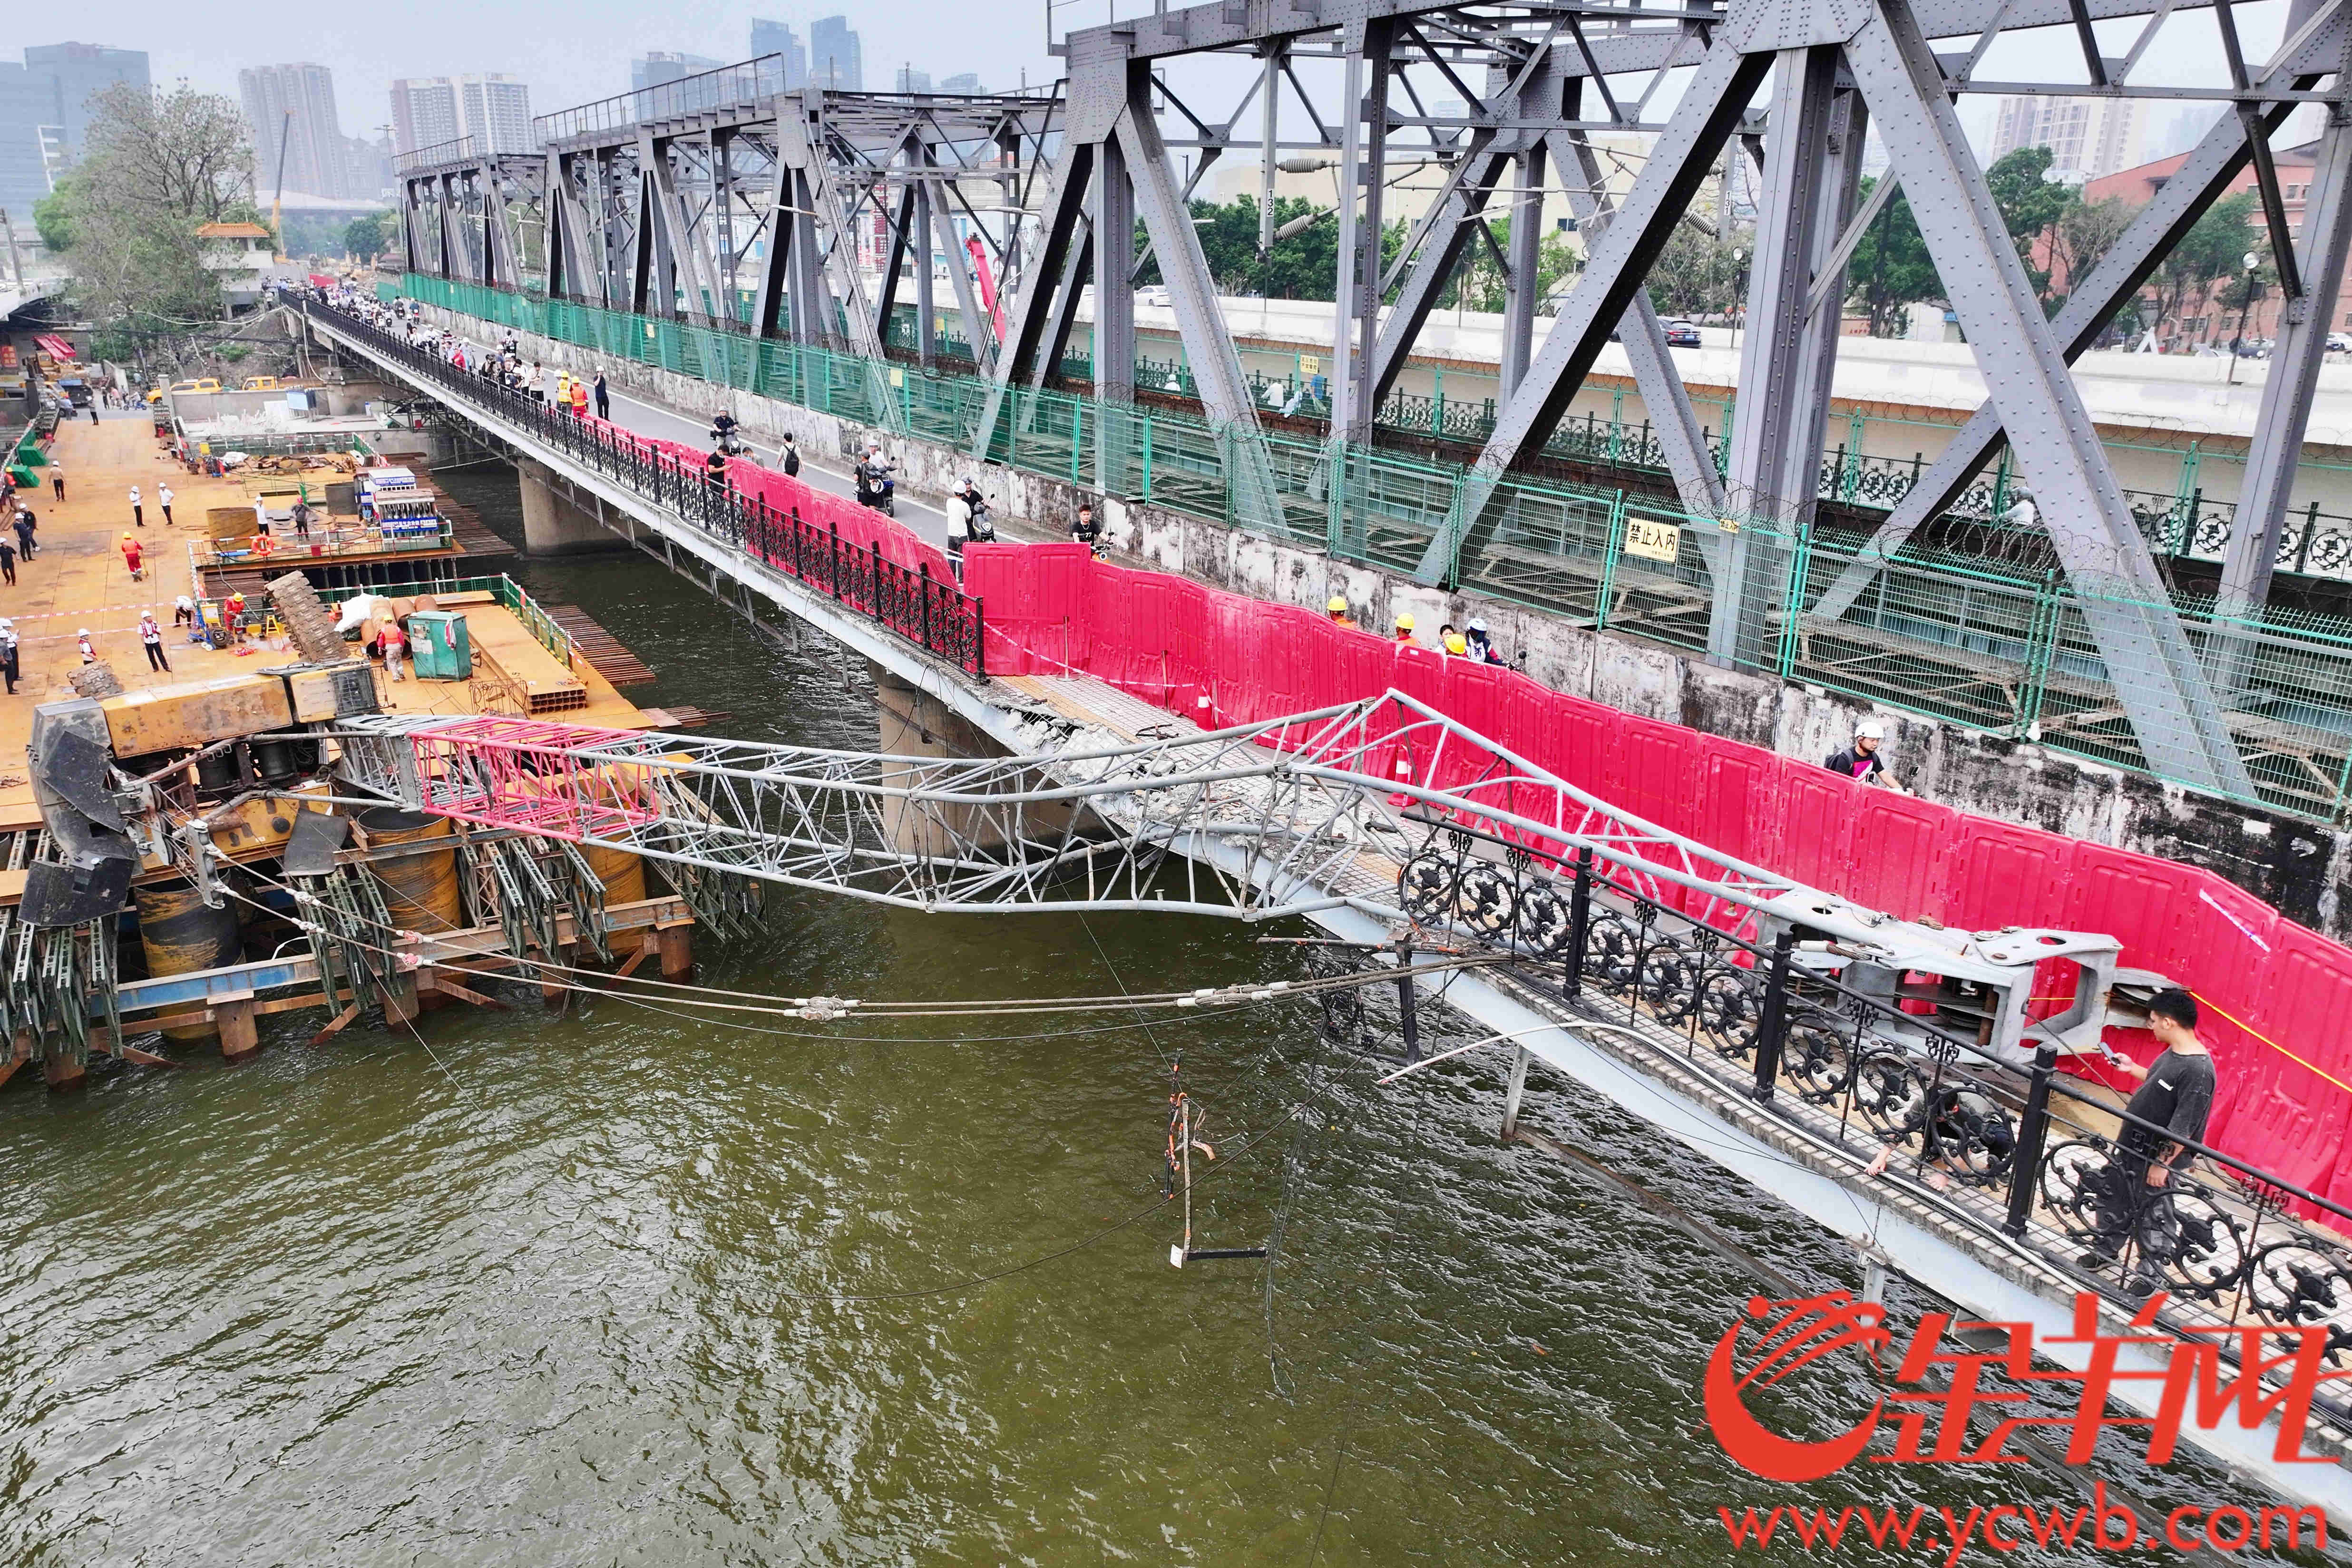 Bwin必赢广州珠江大桥吊机颠覆致局部桥体毁伤施工方称“司机操作不妥导致”(图1)